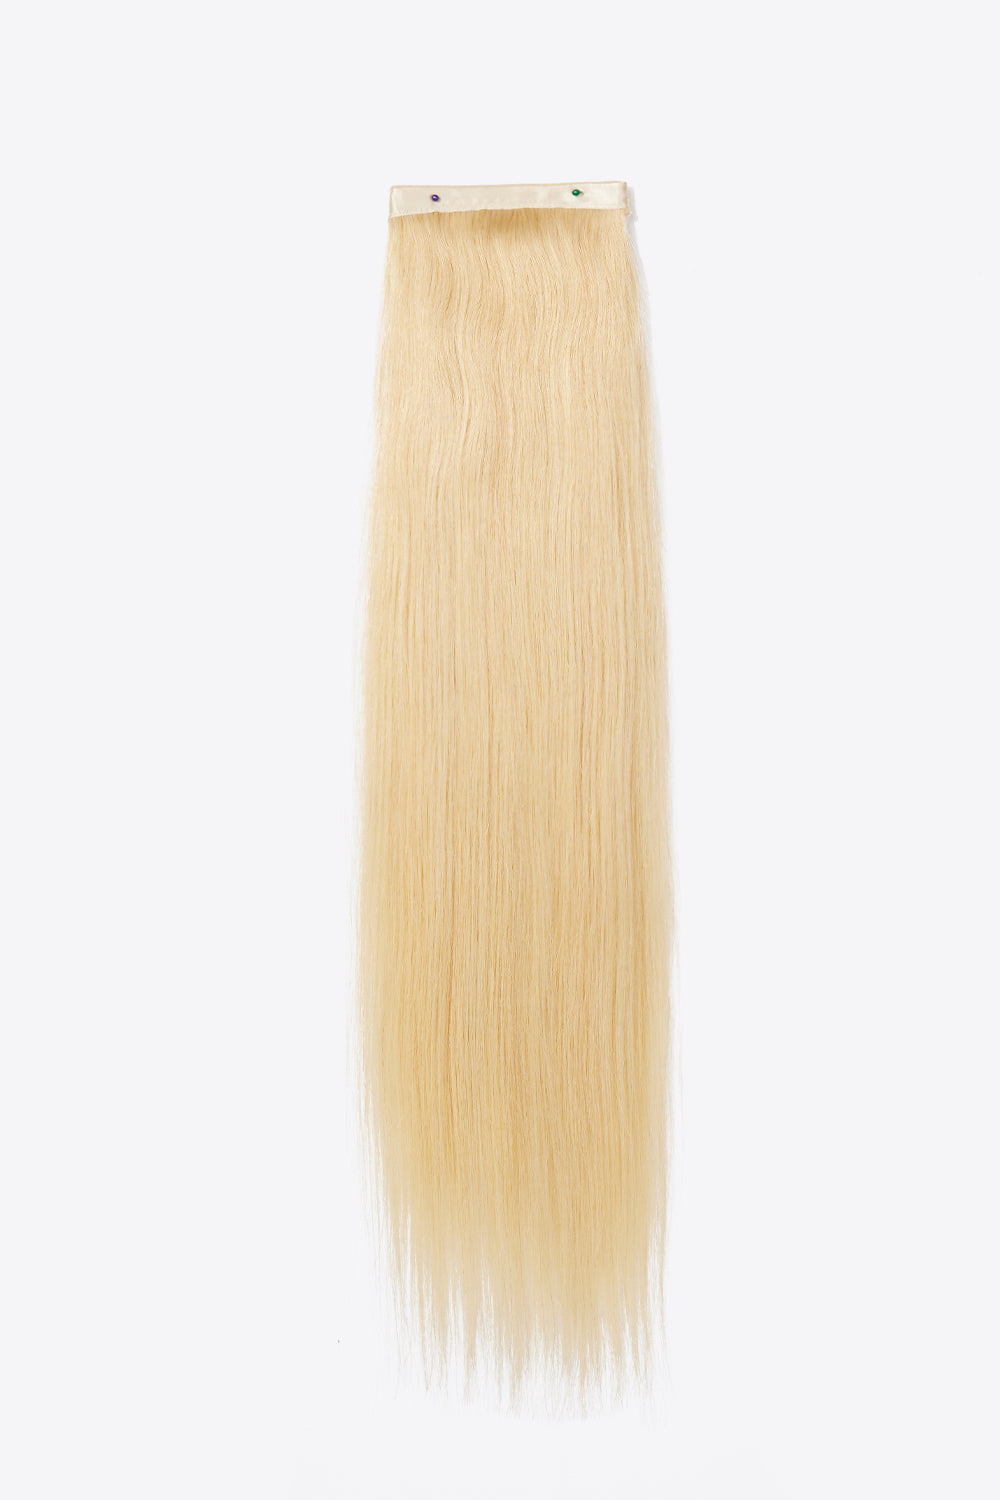 24" 130g #613 Long Lasting Human Hair Ponytail